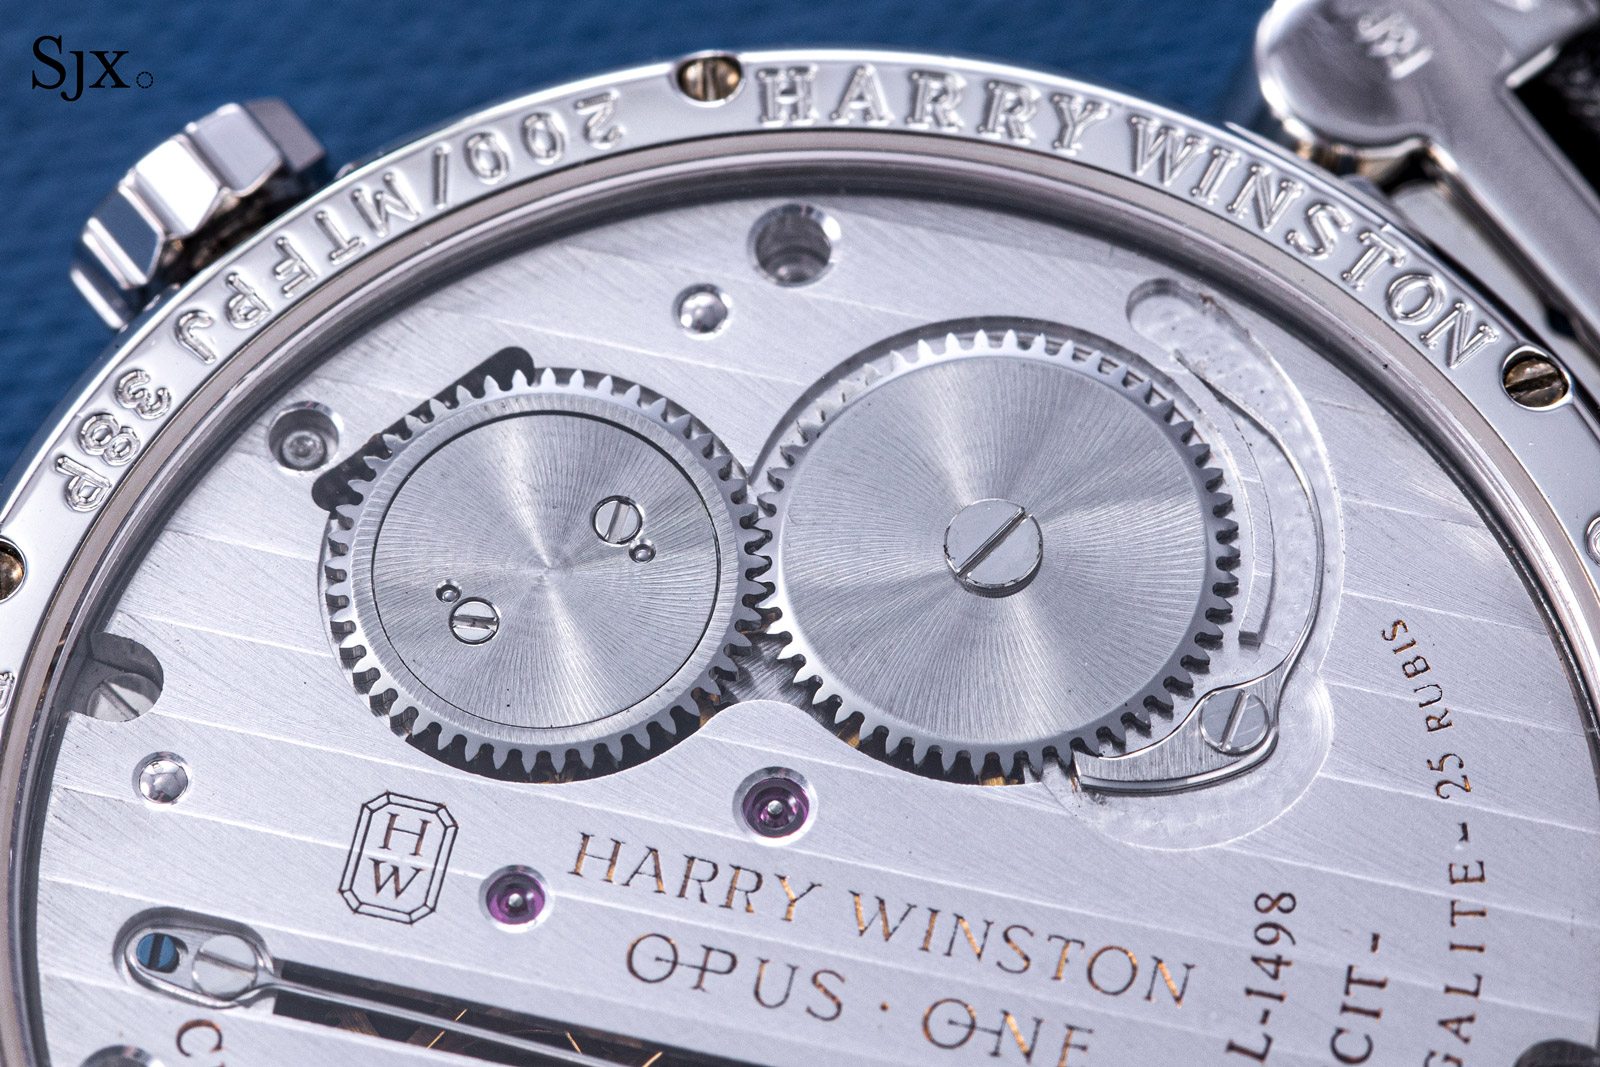 Up Close: Harry Winston Opus Journe 1 Watches | by SJX F.P. Tourbillon